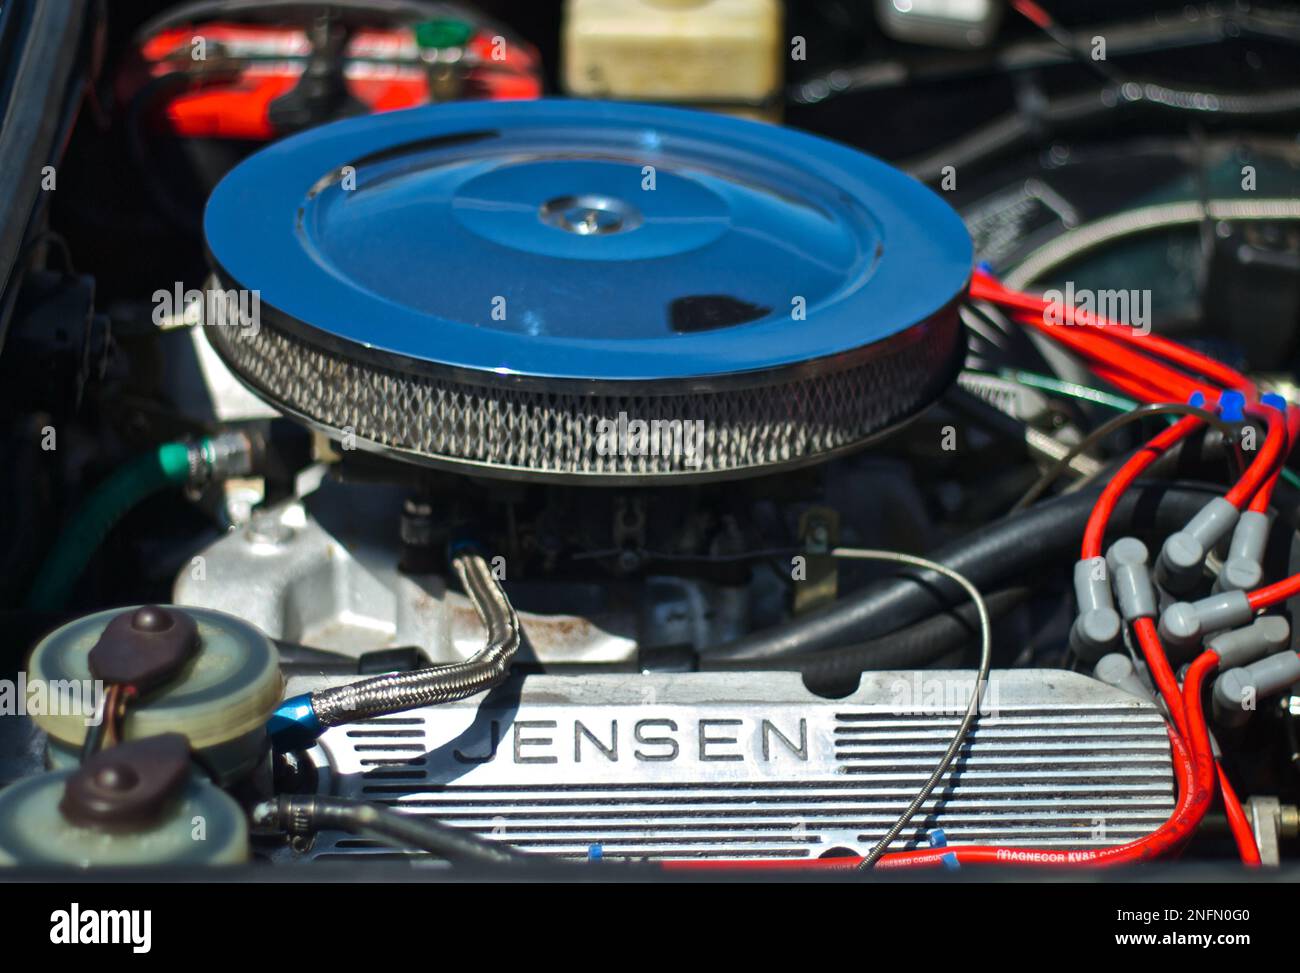 Classic British Sport Car Jensen Engine Part in Bokeh Depth of Field Background Stock Photo